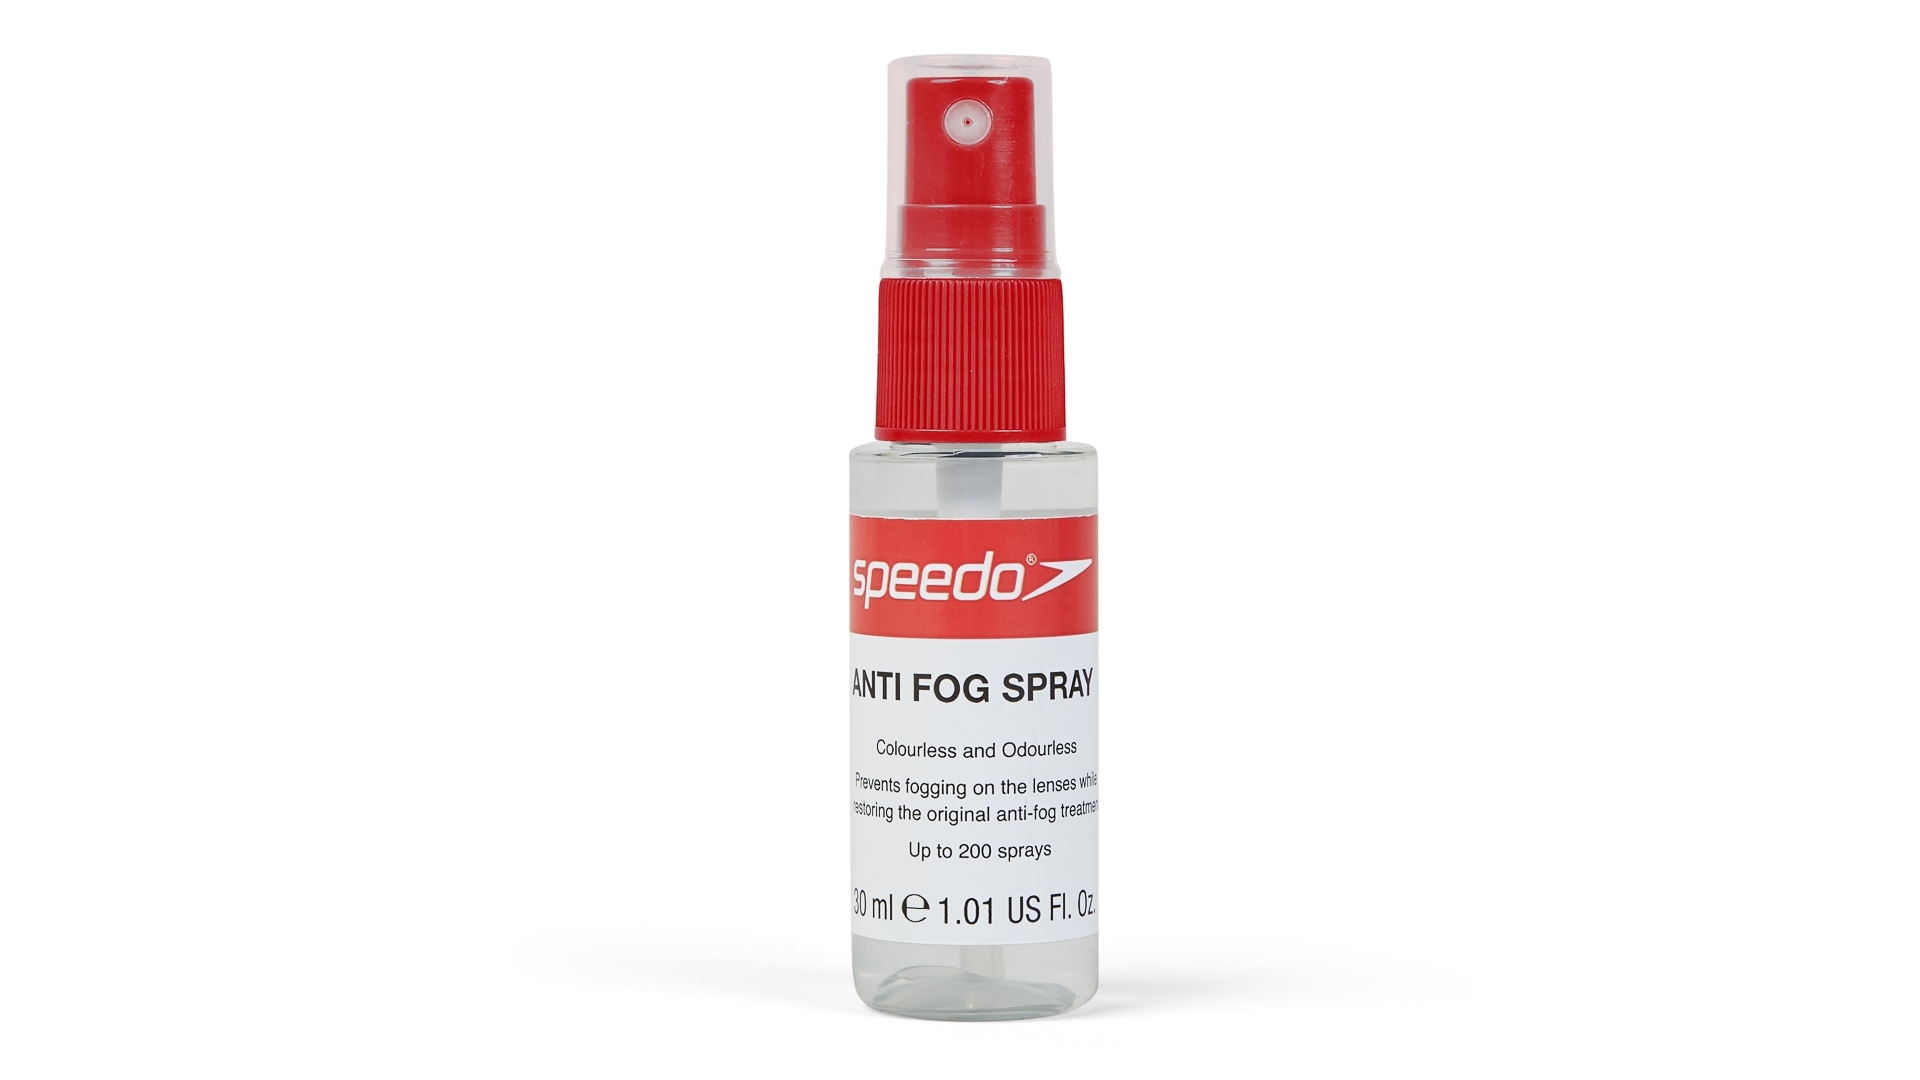 Arena Instant Anti Fog spray